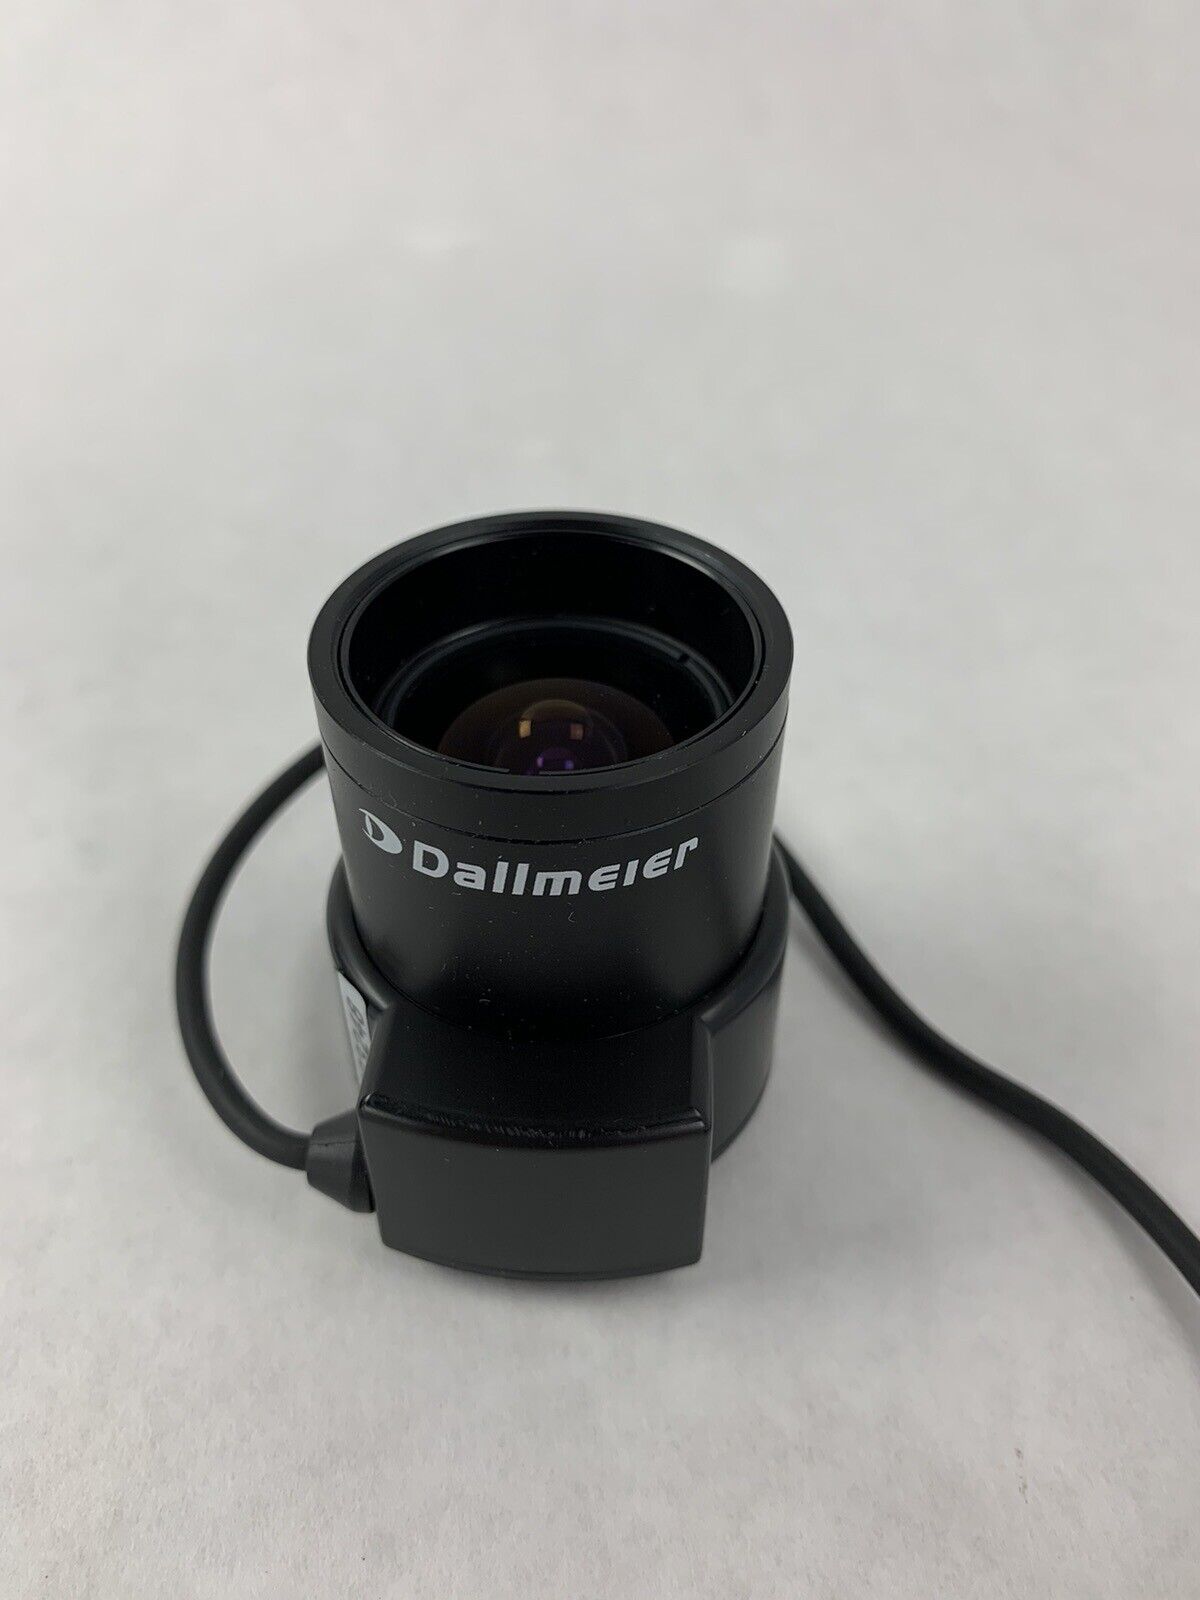 Dallmeier 3.9-10mm D&N F1.8